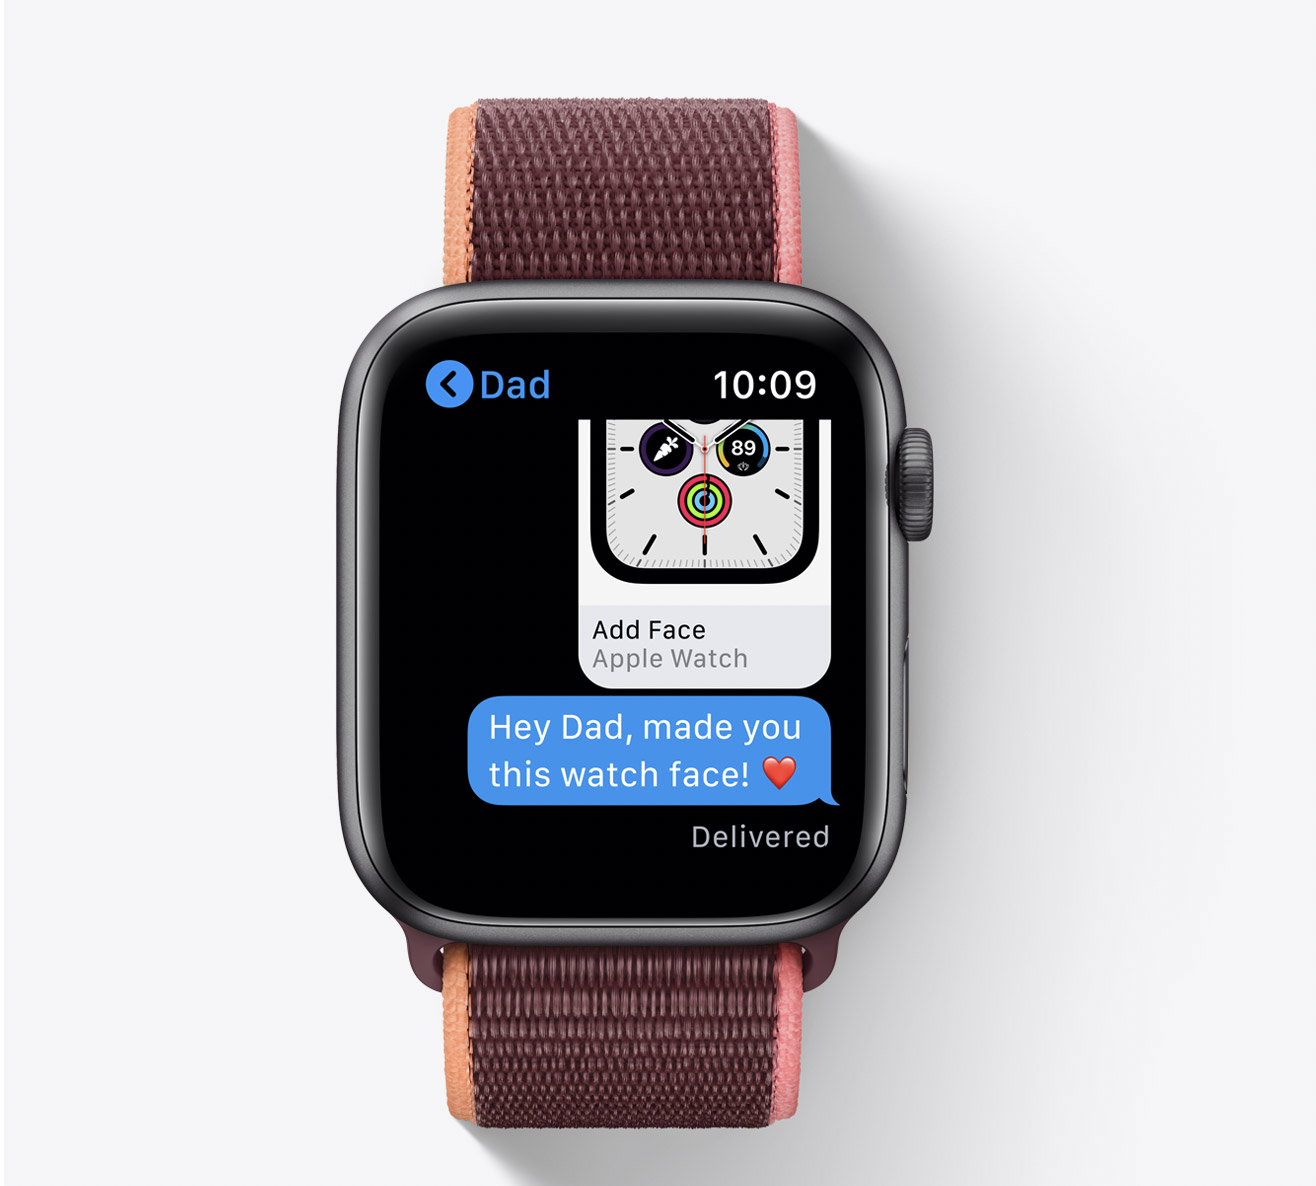 Як налаштувати годинник Apple Watch без iPhone?